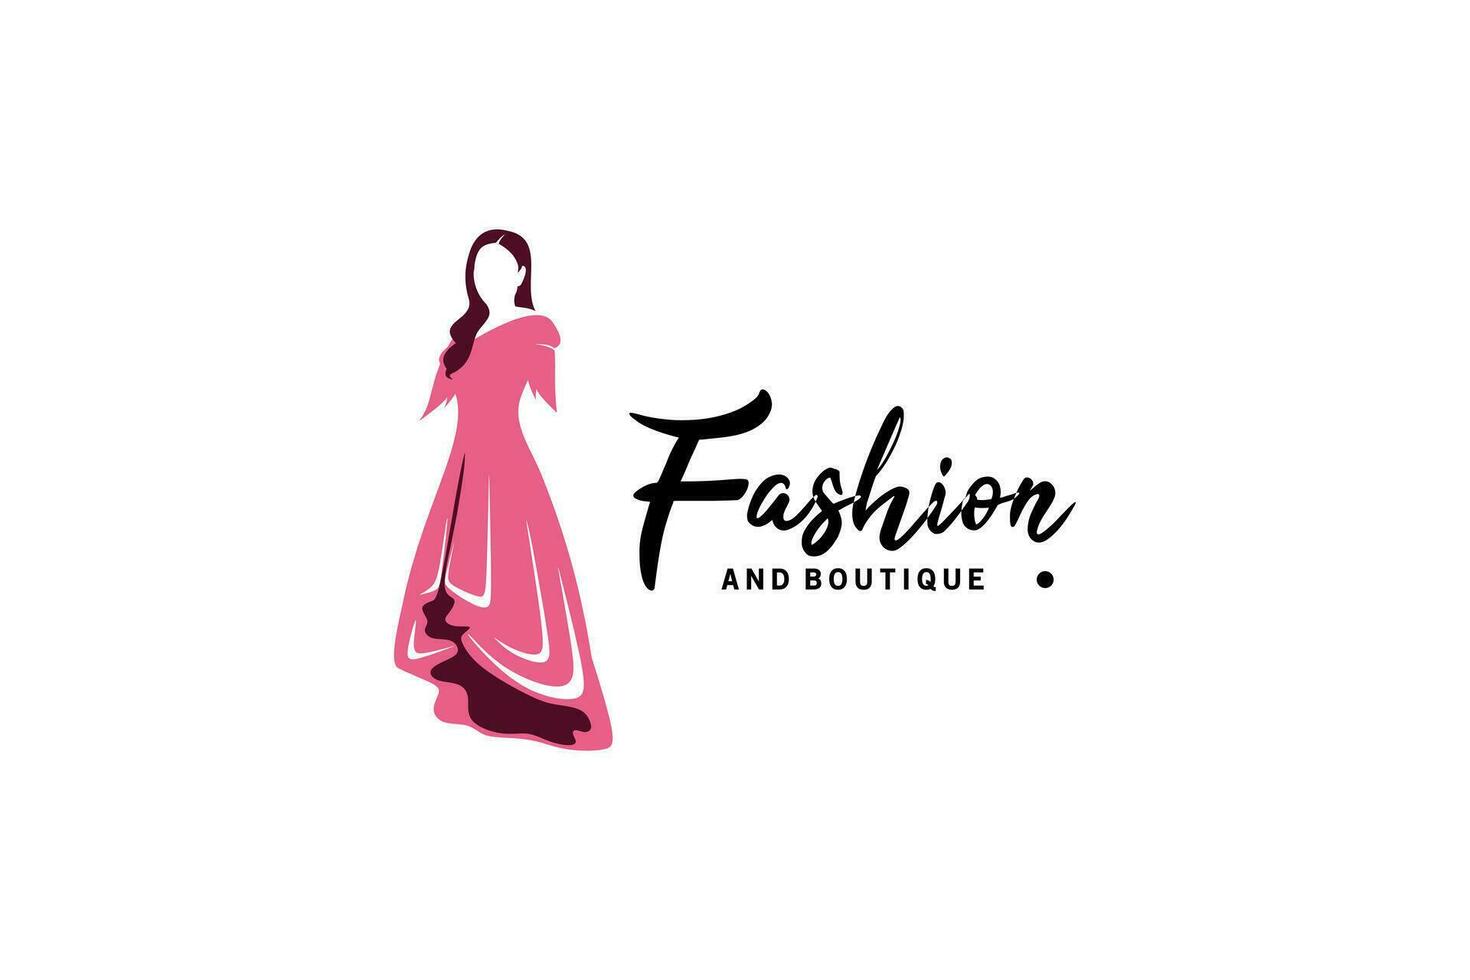 Beautiful woman beauty dress logo design with creative concept 26634616 ...